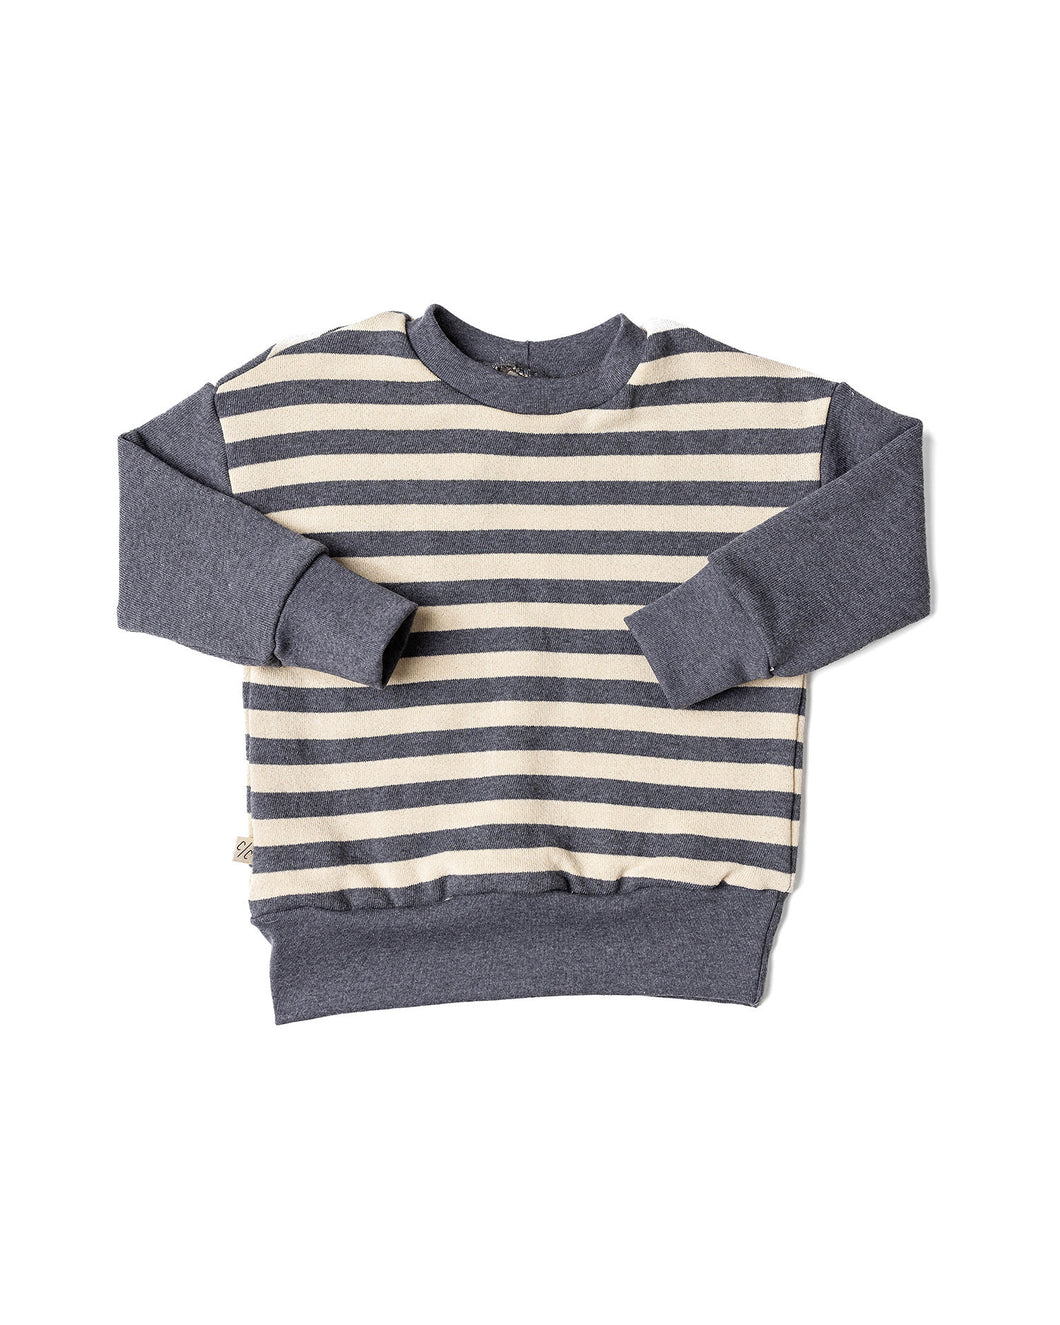 boxy sweatshirt - iron gray and iron gray beige stripe